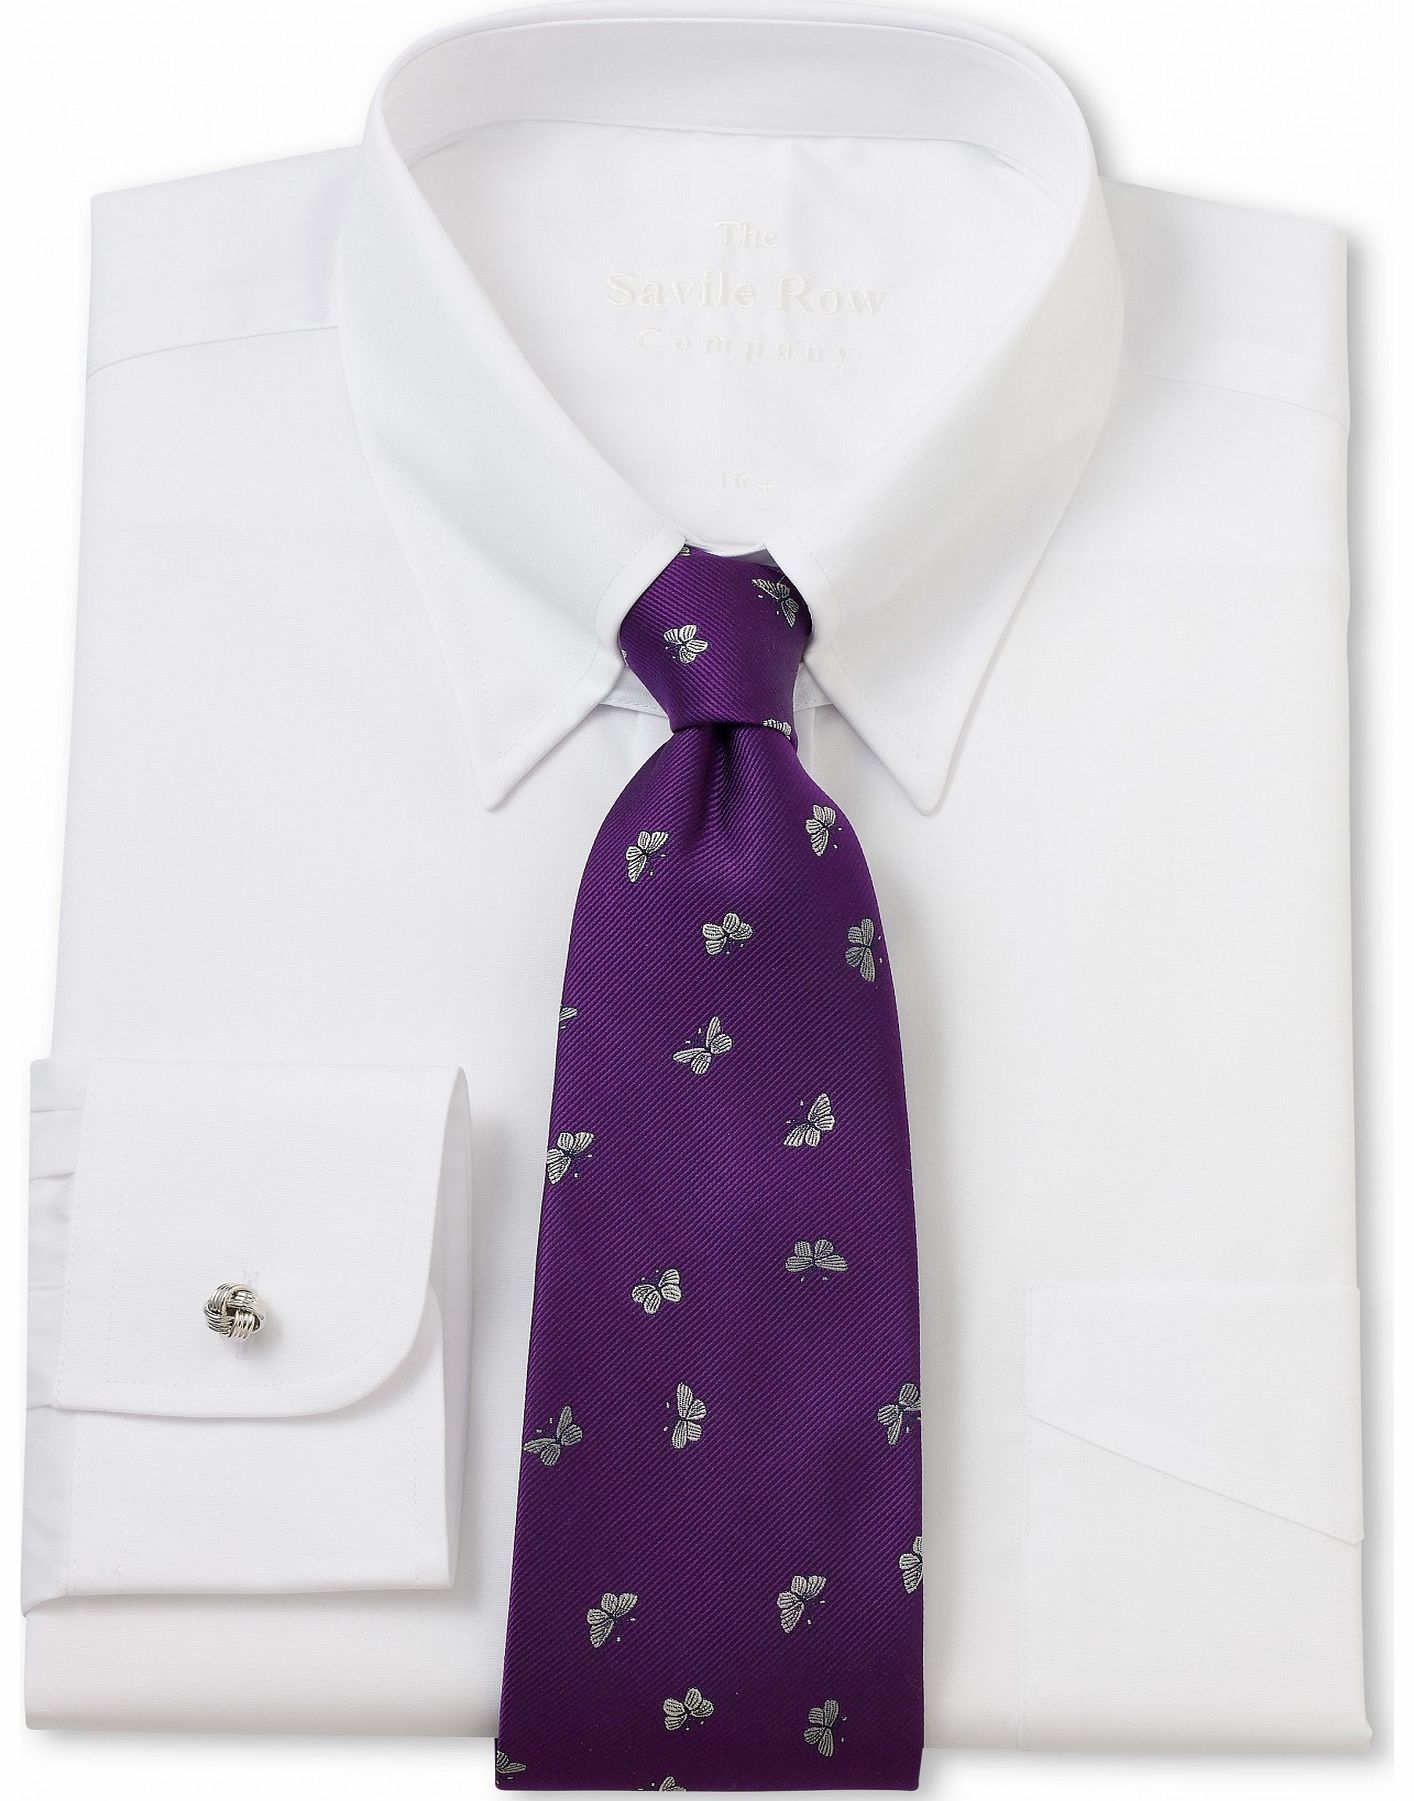 Savile Row Company White Poplin Tab Collar Classic Fit Shirt 18